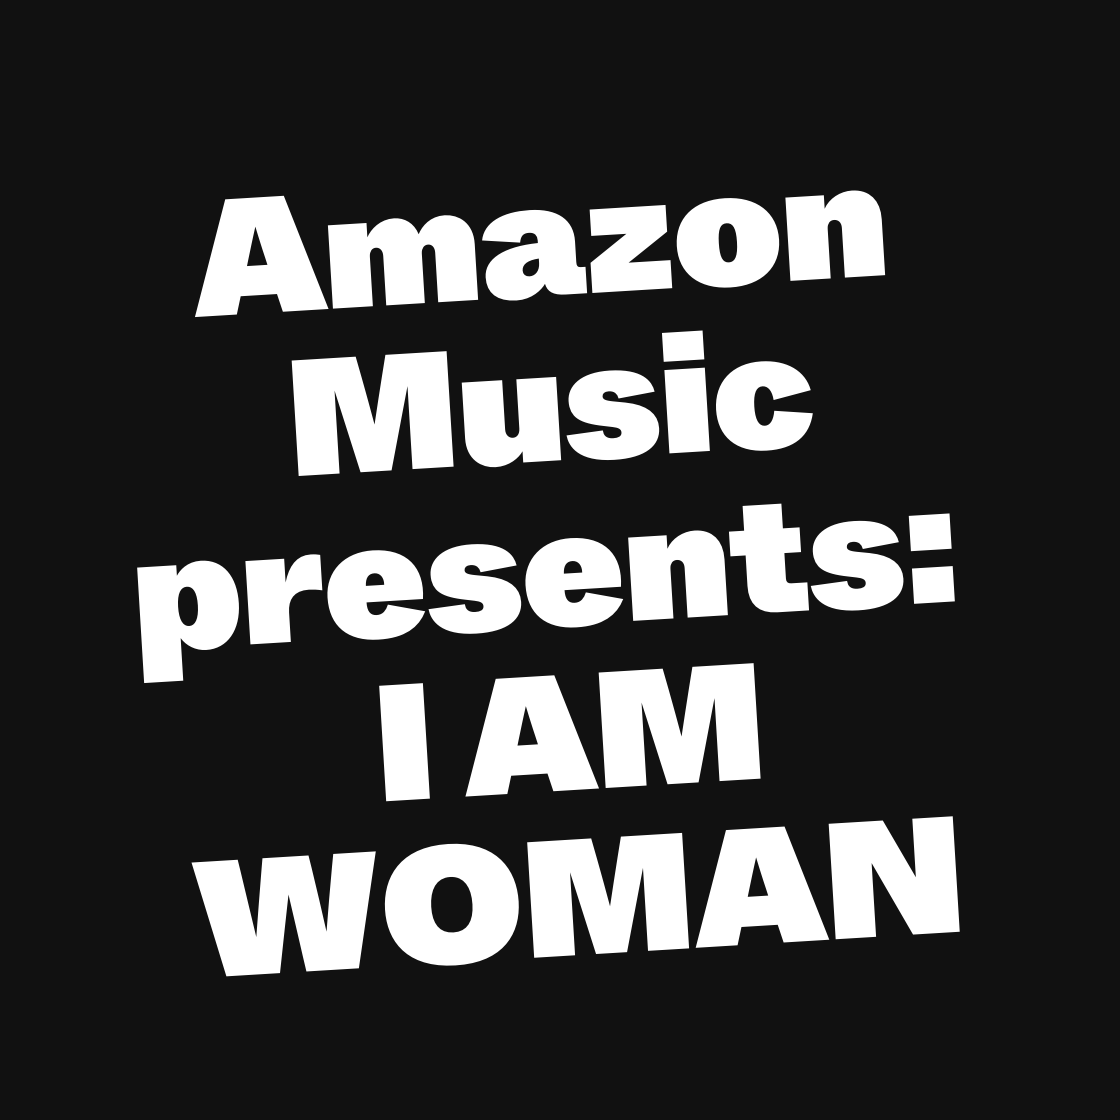 Amazon Music presents: I AM WOMAN